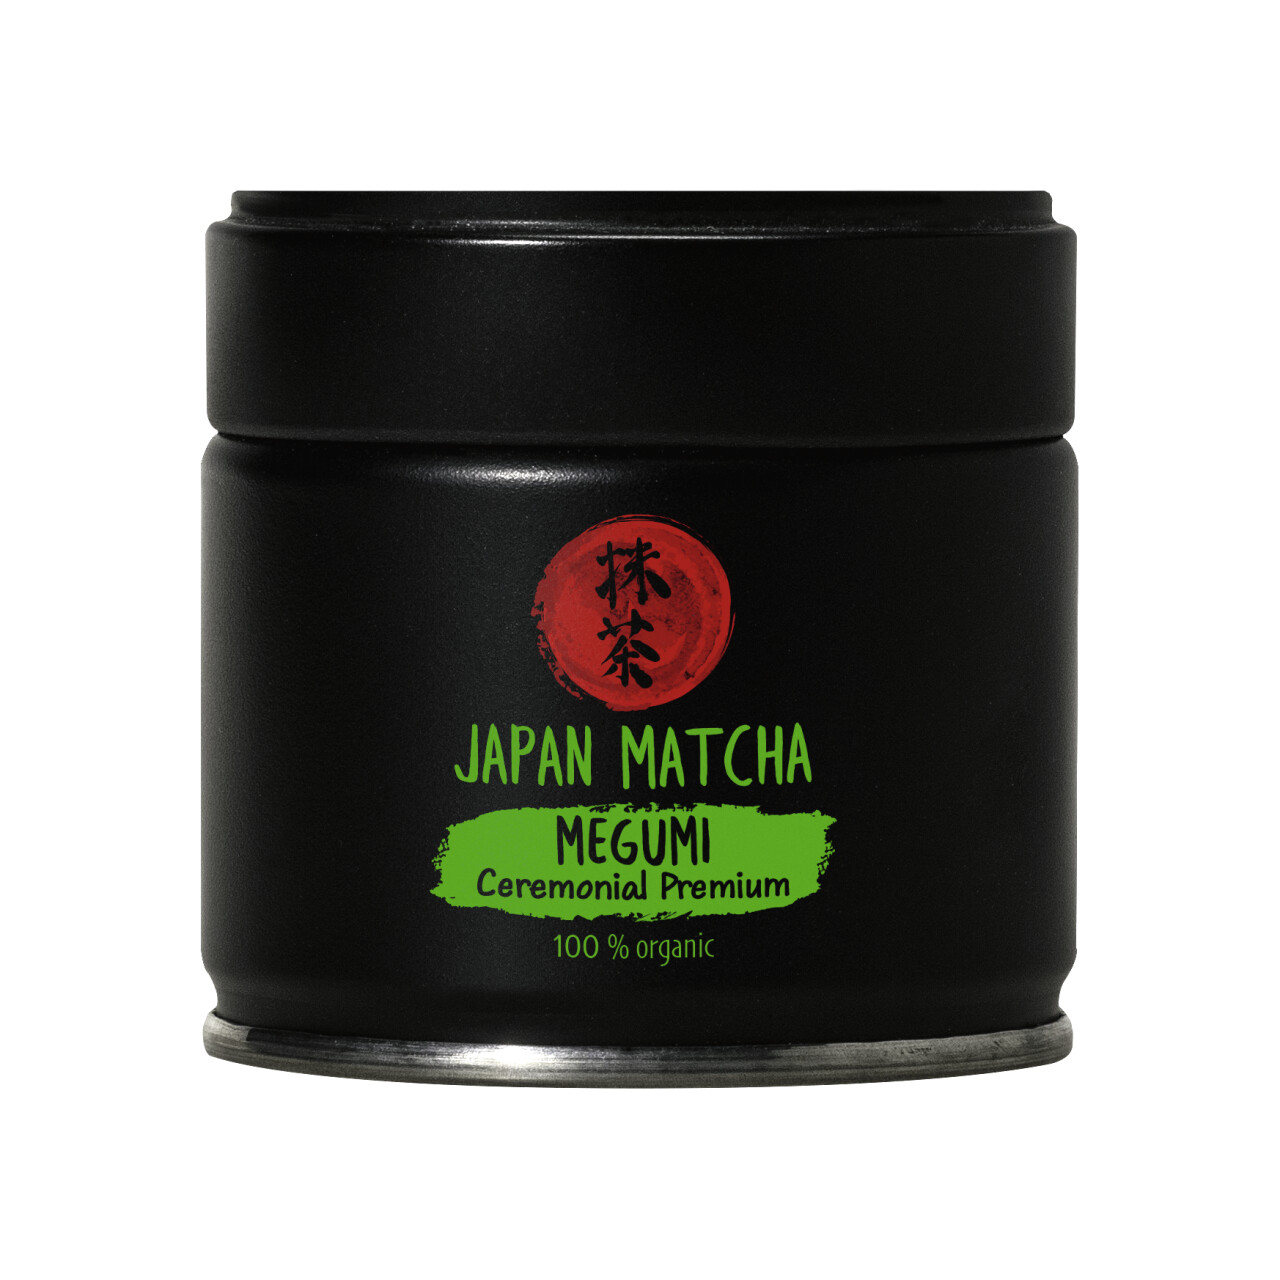 Japan Matcha Megumi - Ceremonial Premium Organic Tea*, 30g